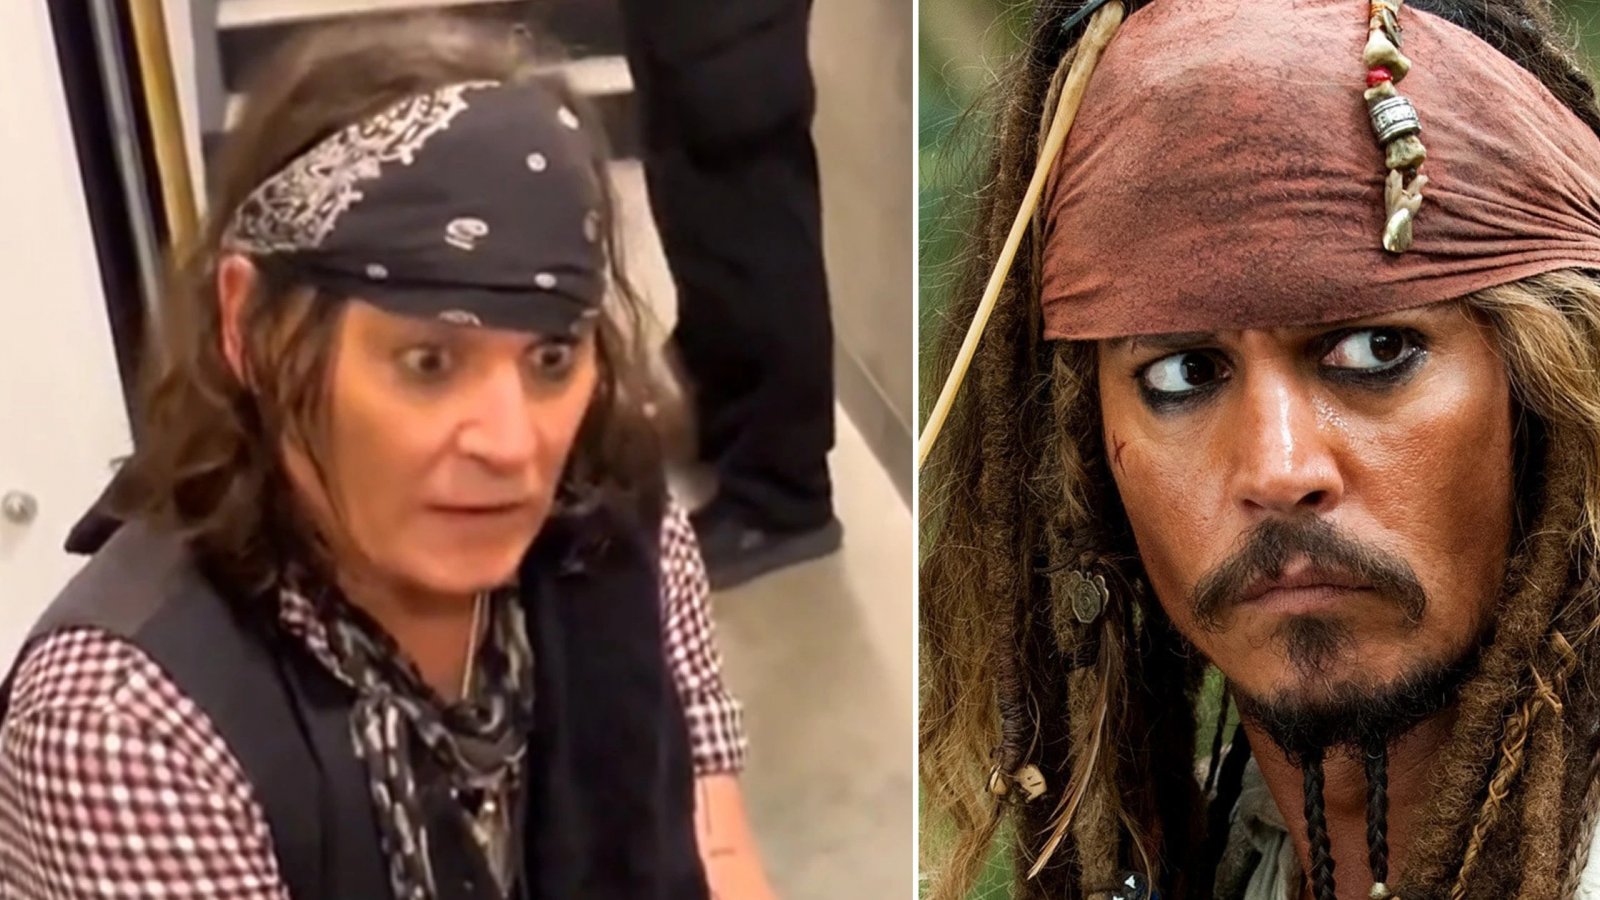 'Johnny Depp tornerà nel prossimo film di Pirati dei Caraibi per $ 300 milioni', afferma una fonte anonima